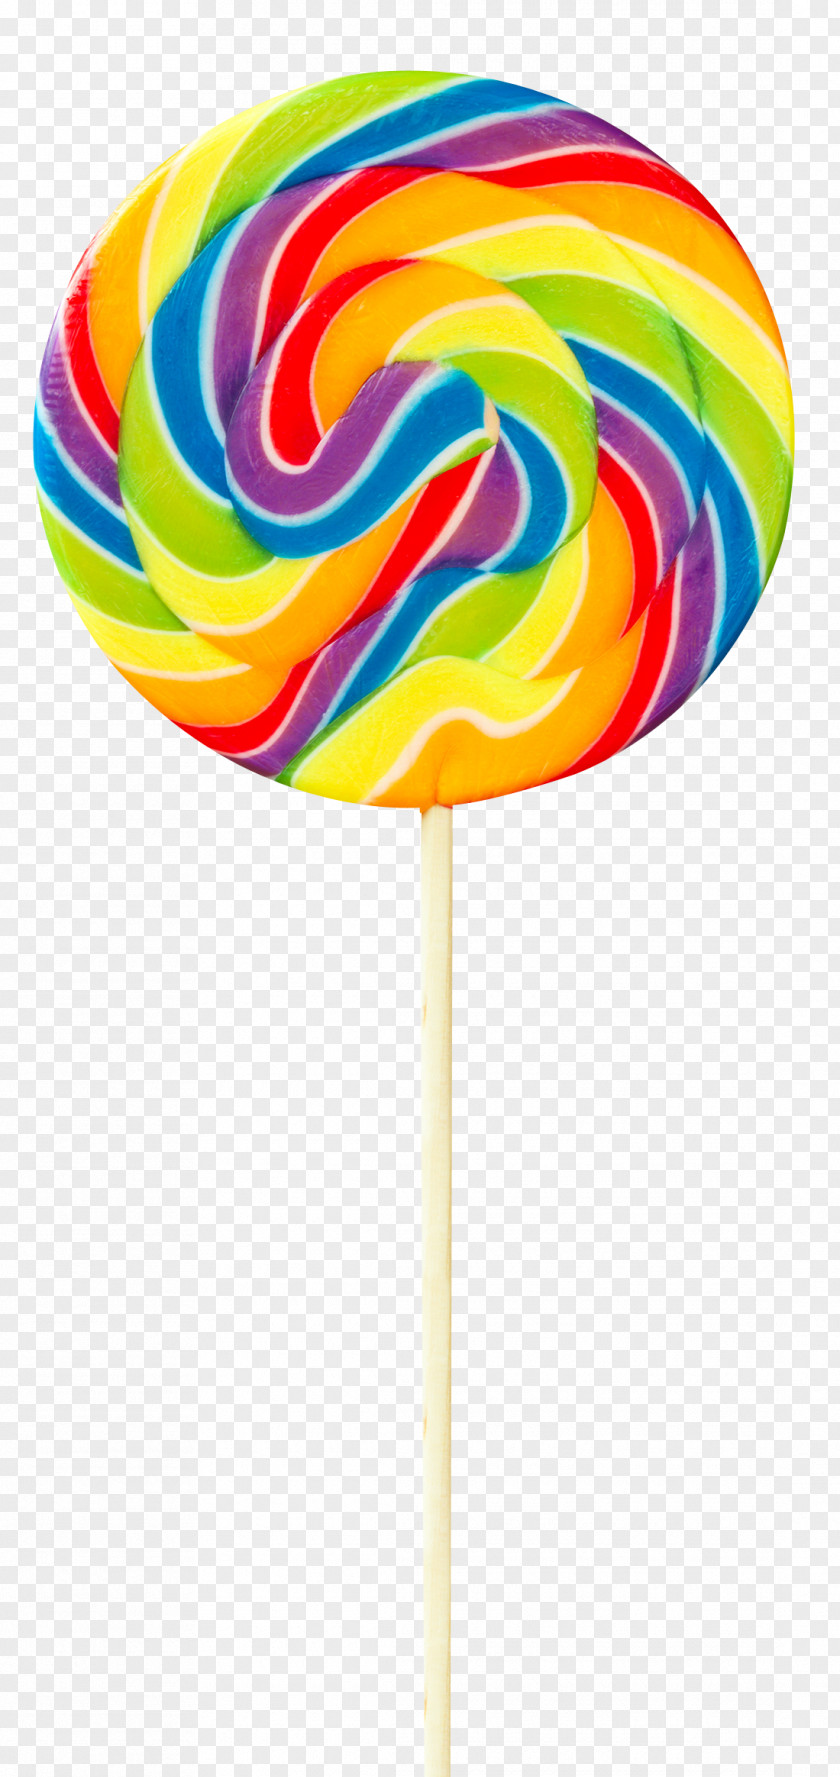 Candy Lollipop Stick Gummi Ice Cream PNG